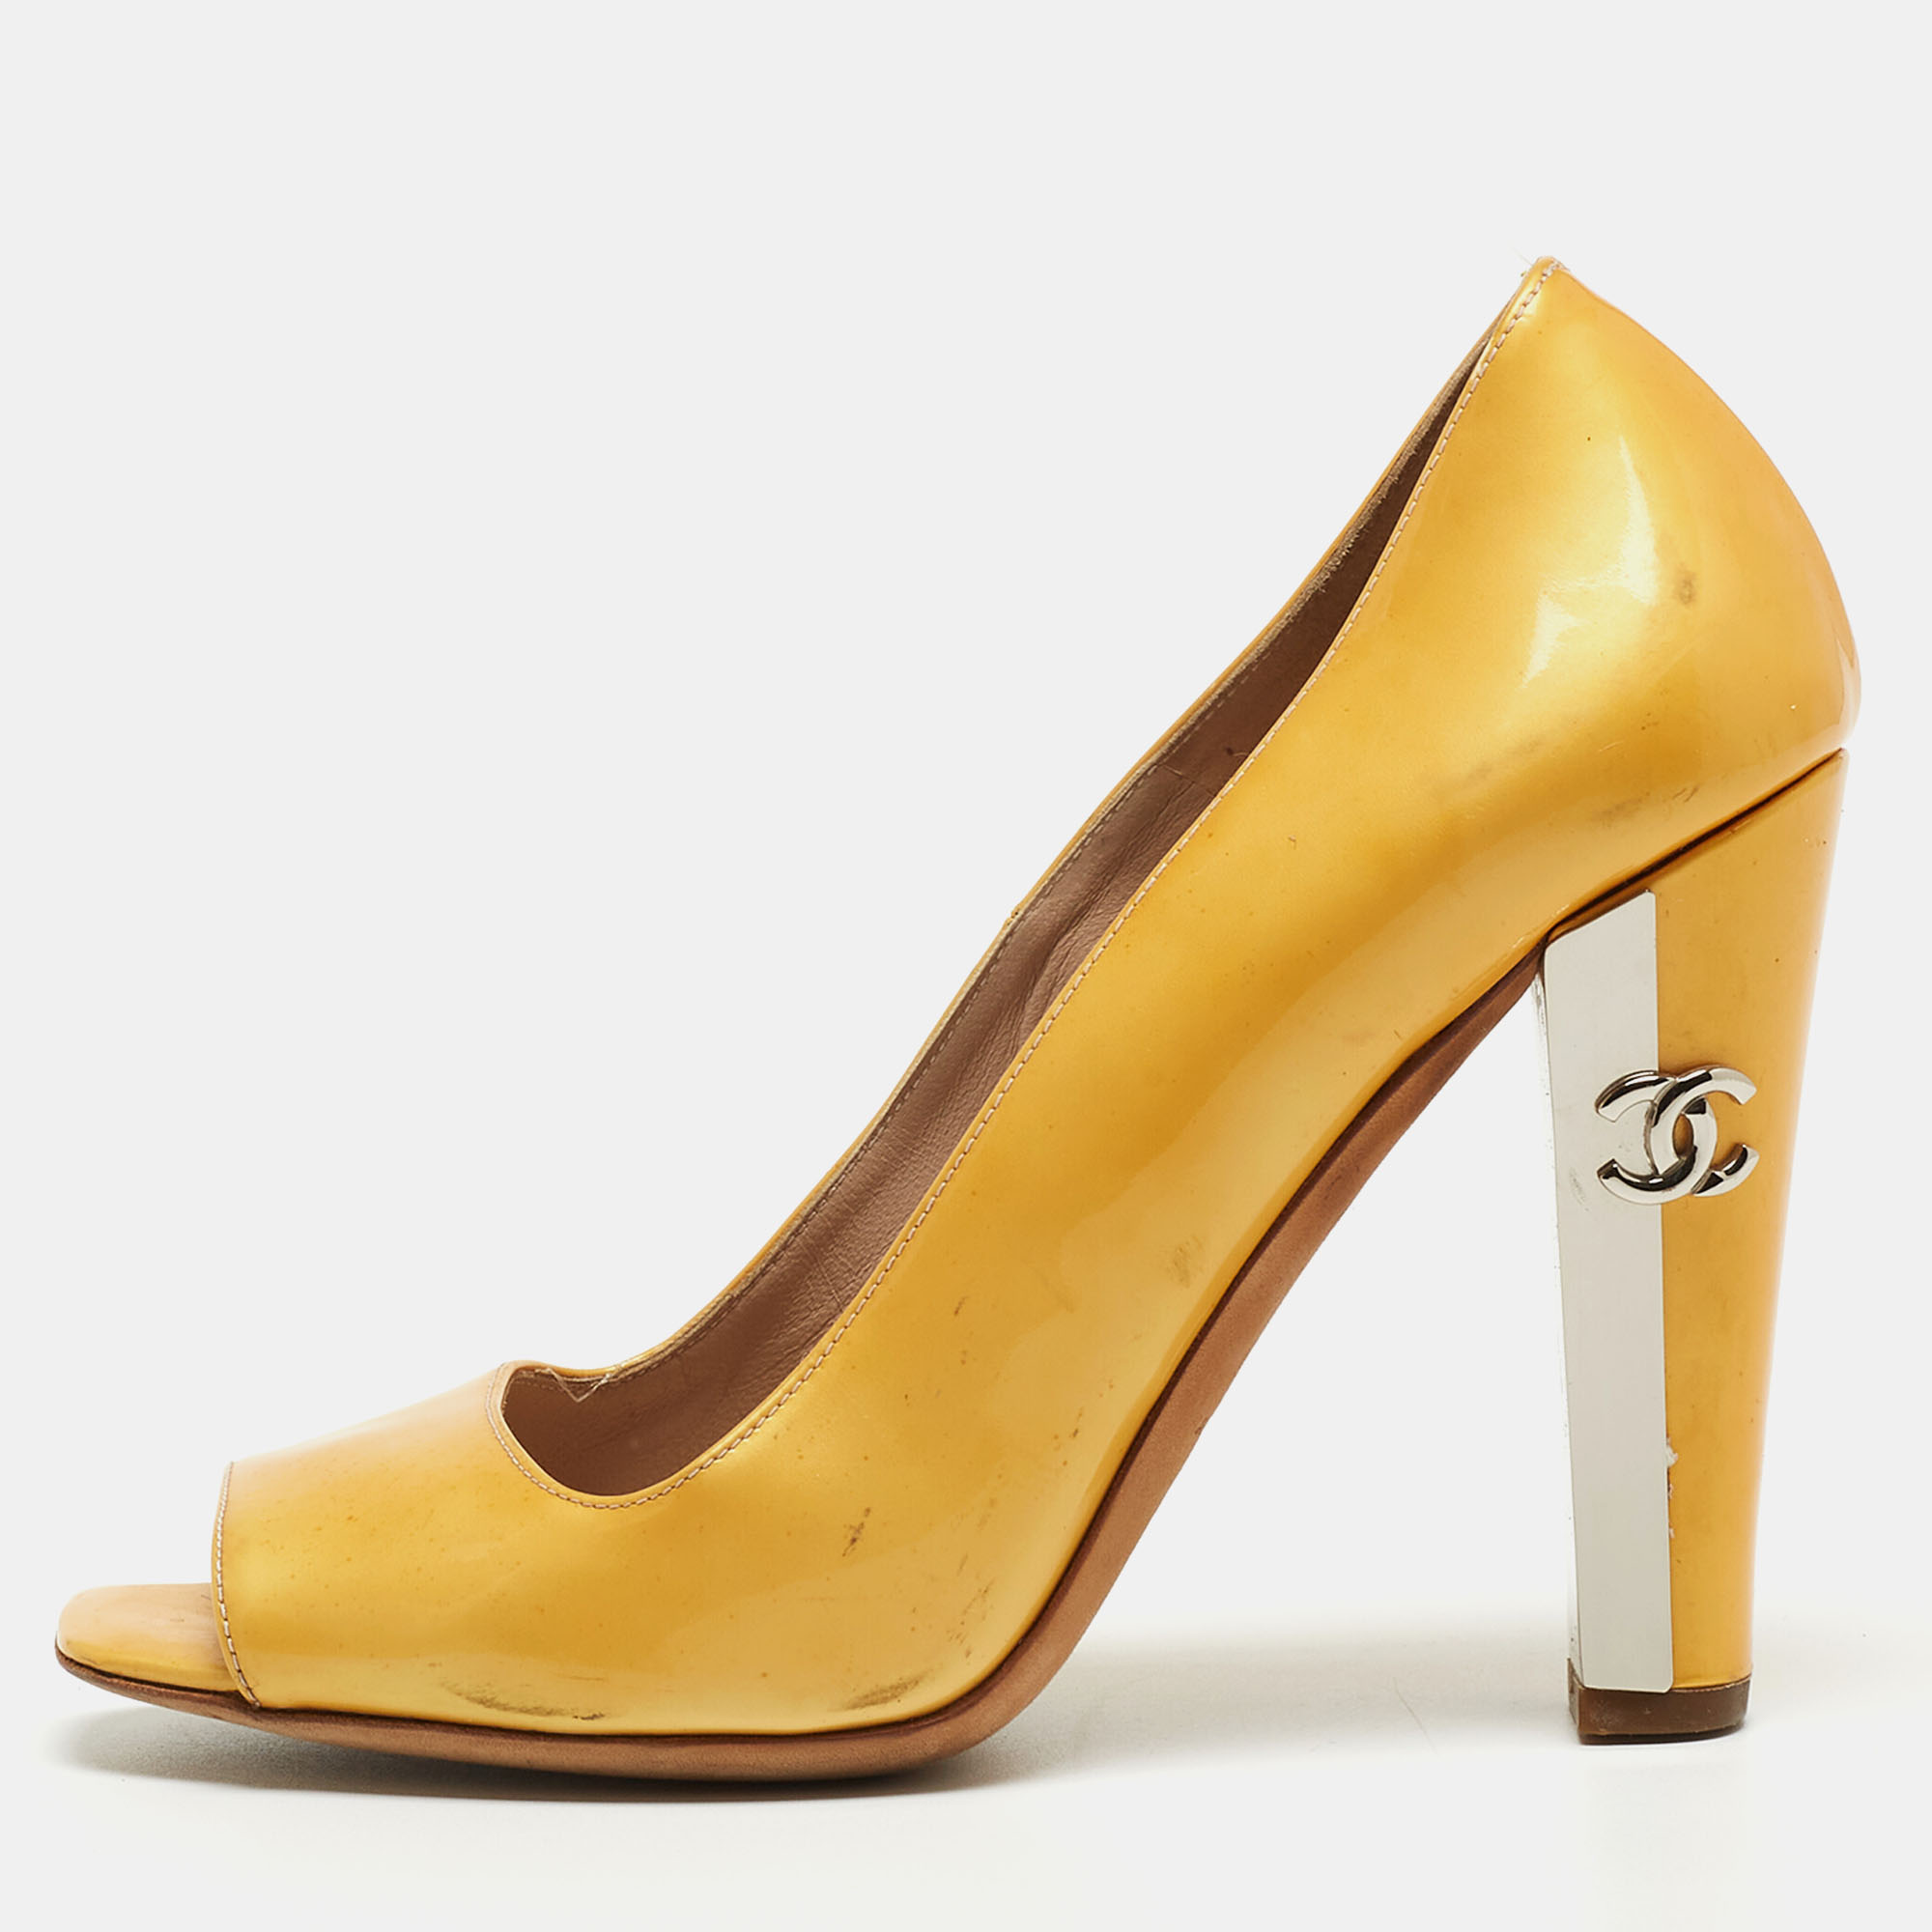 Chanel yellow patent leather peep toe block heel pumps size 36